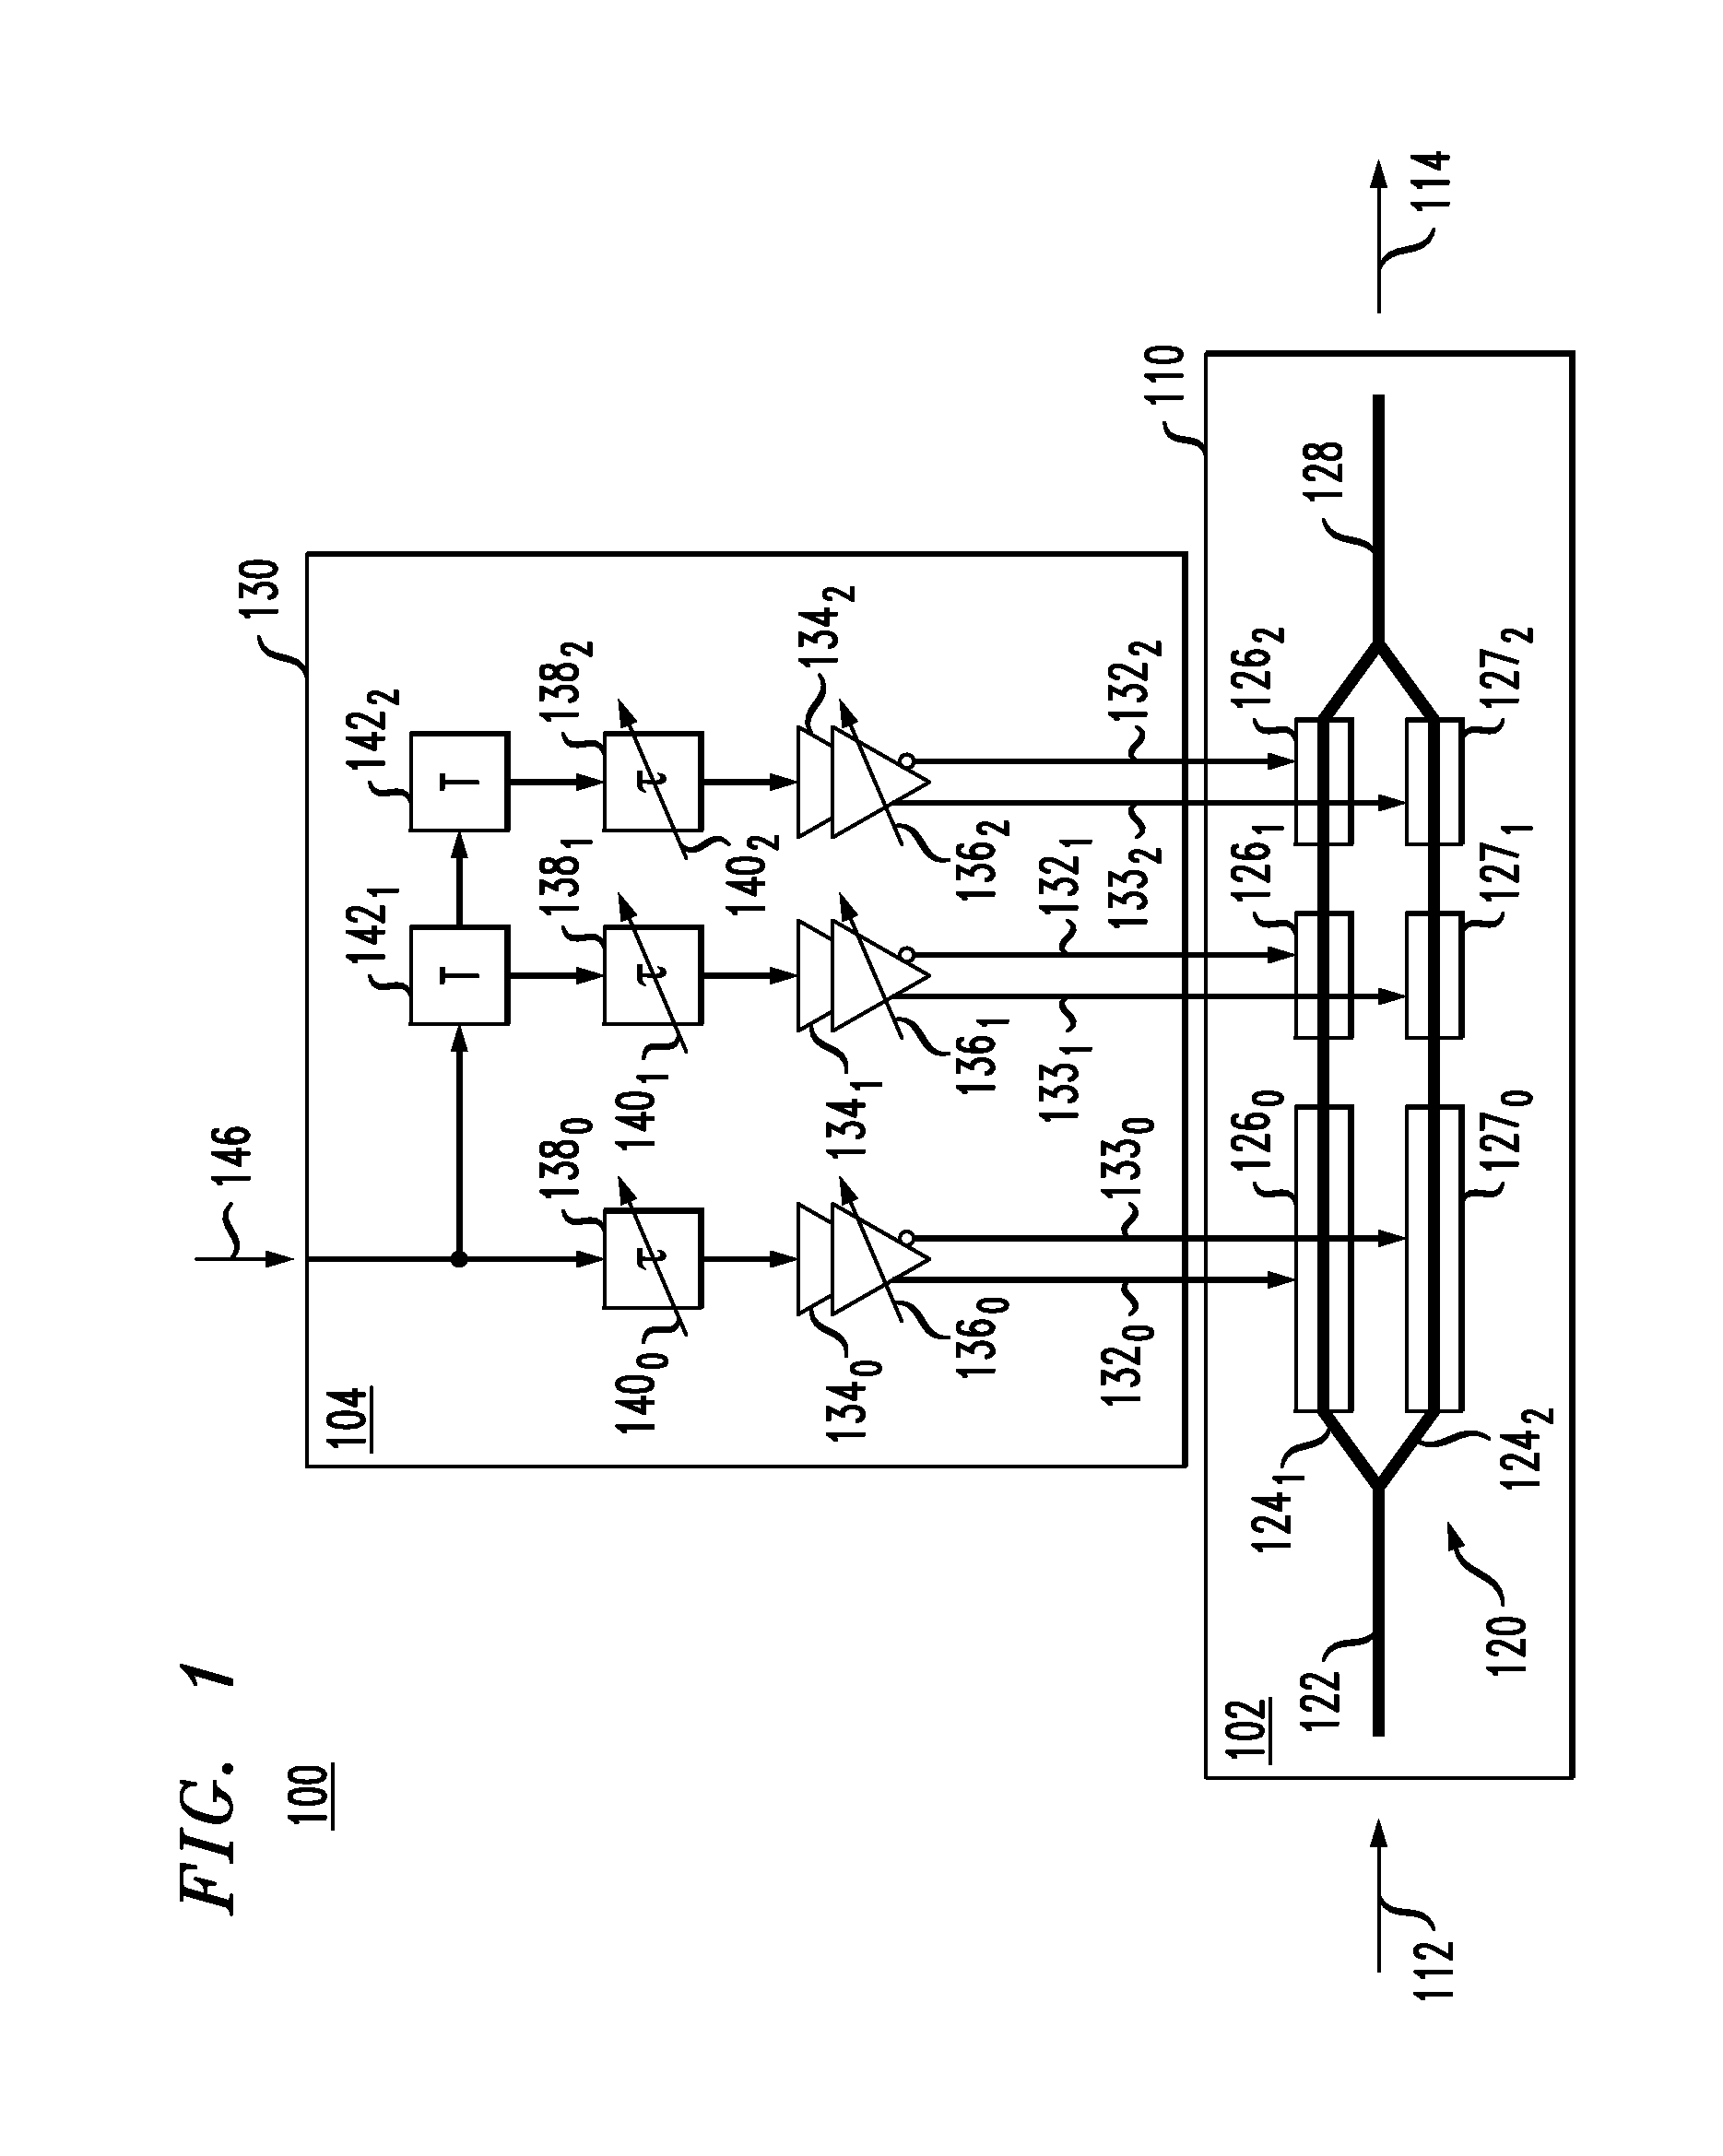 Filter structure for driving an optical modulator